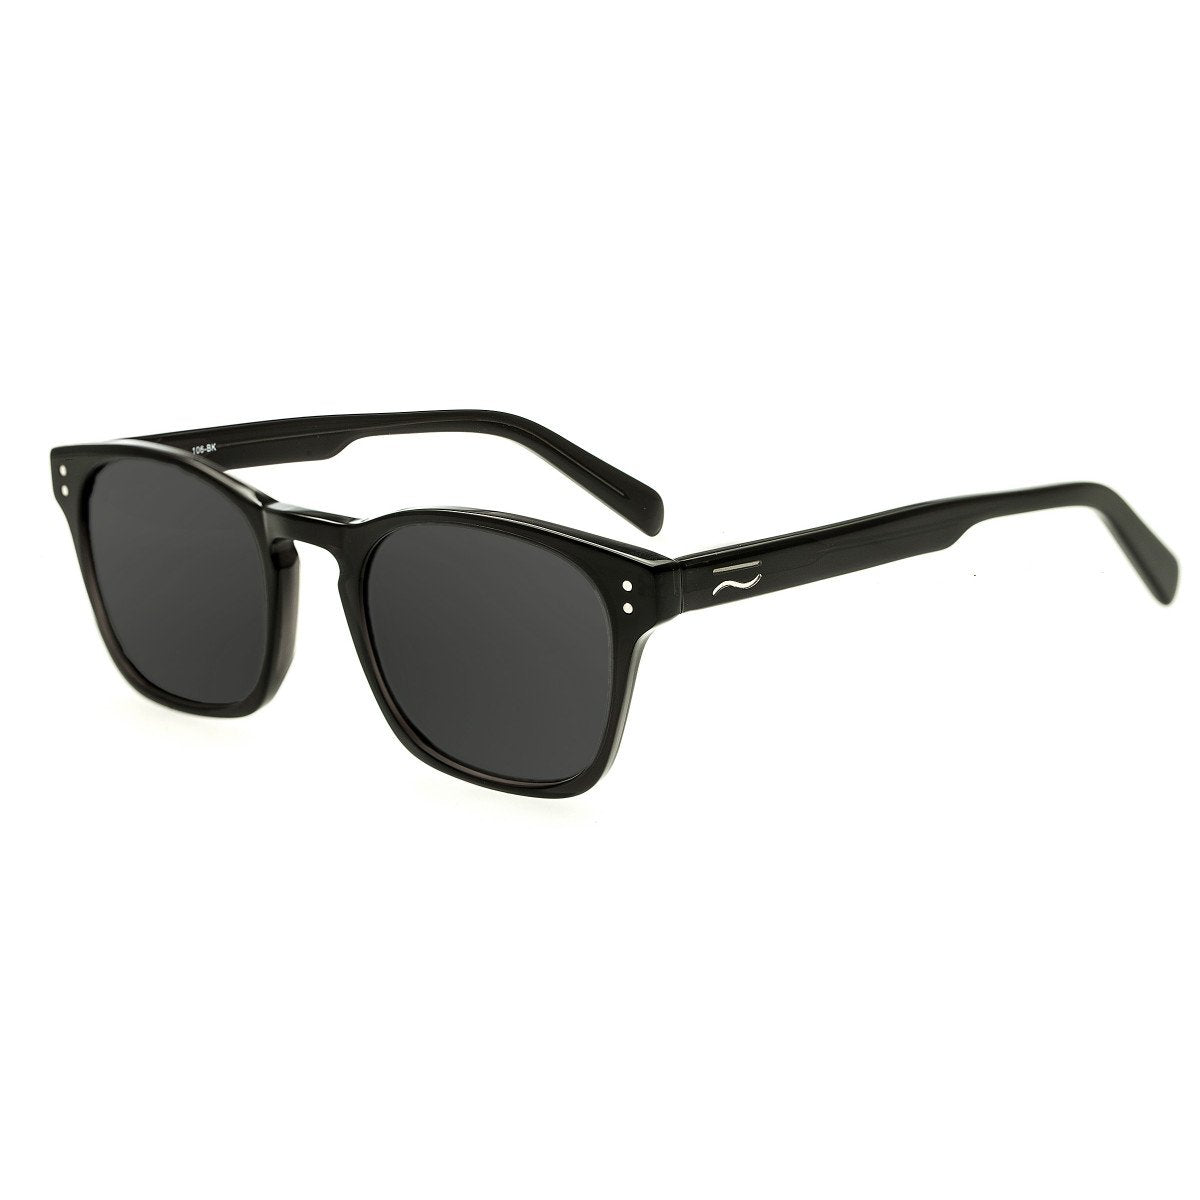 Simplify Bennett Polarized Sunglasses - Black/Black - SSU106-BK